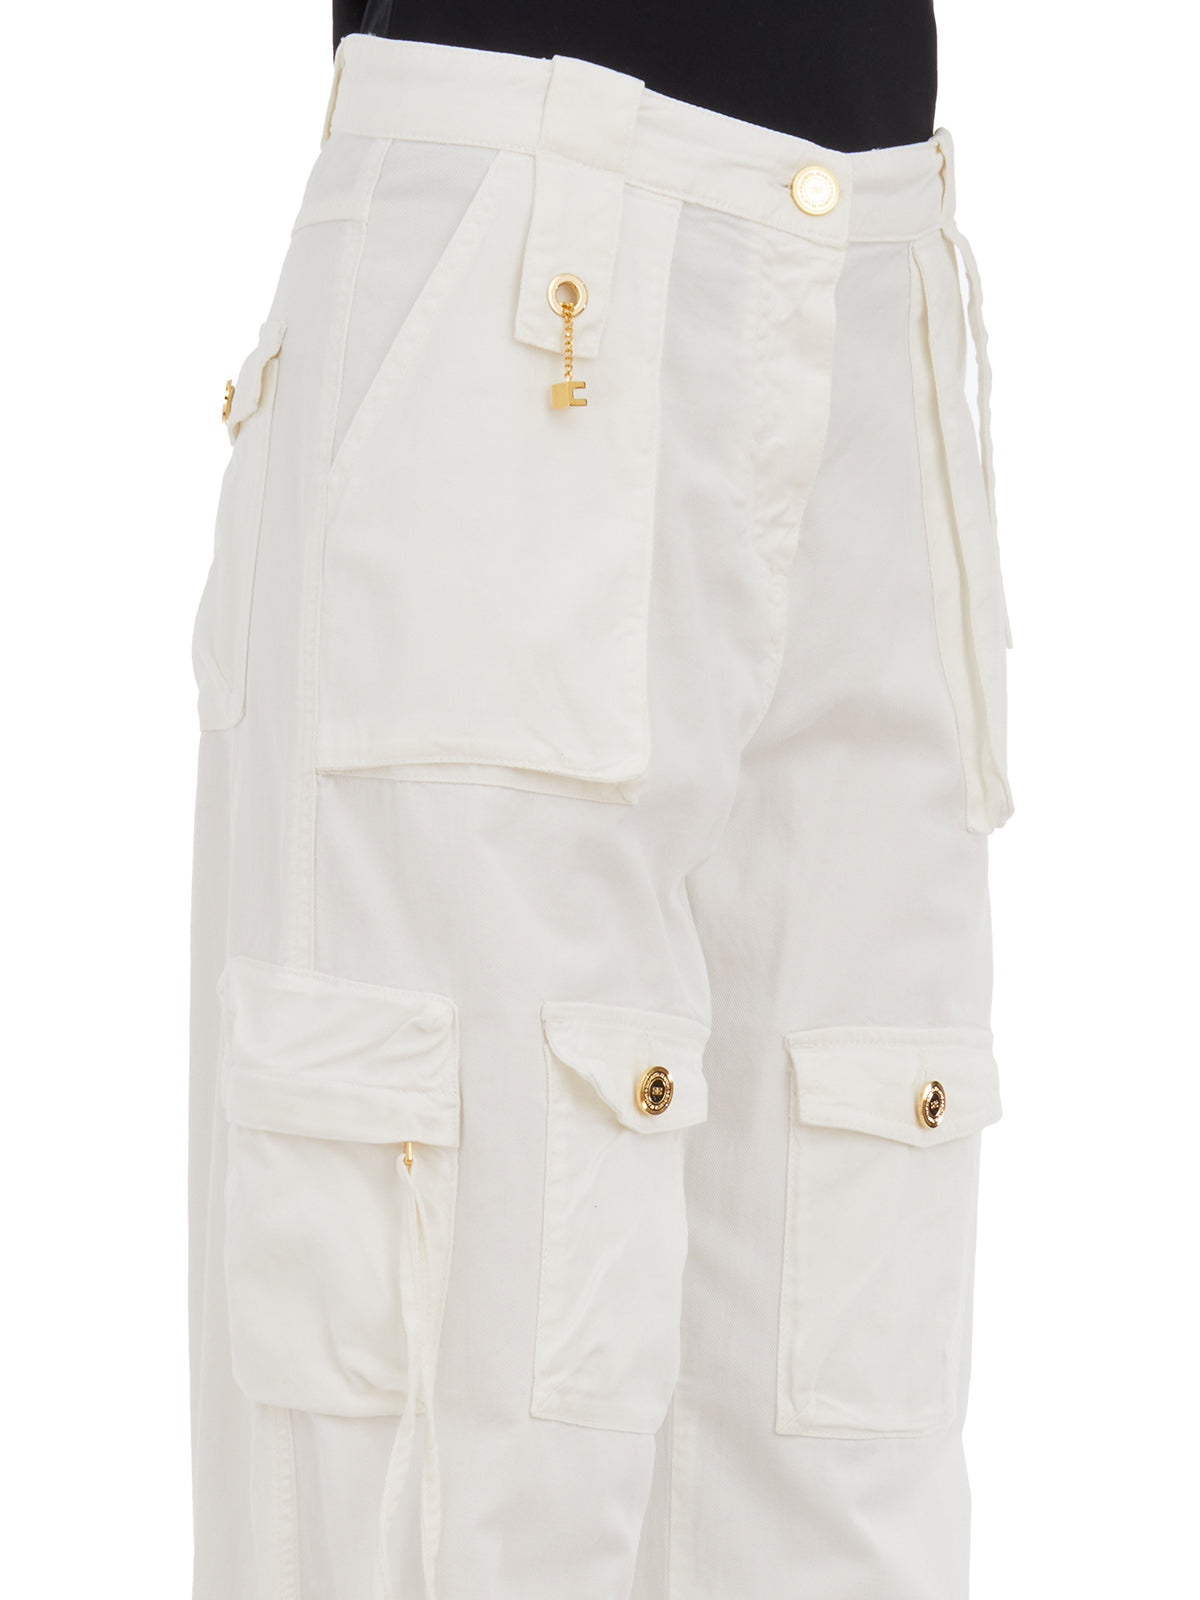 ELISABETTA FRANCHI White Cargo Pants with Golden Details for Women